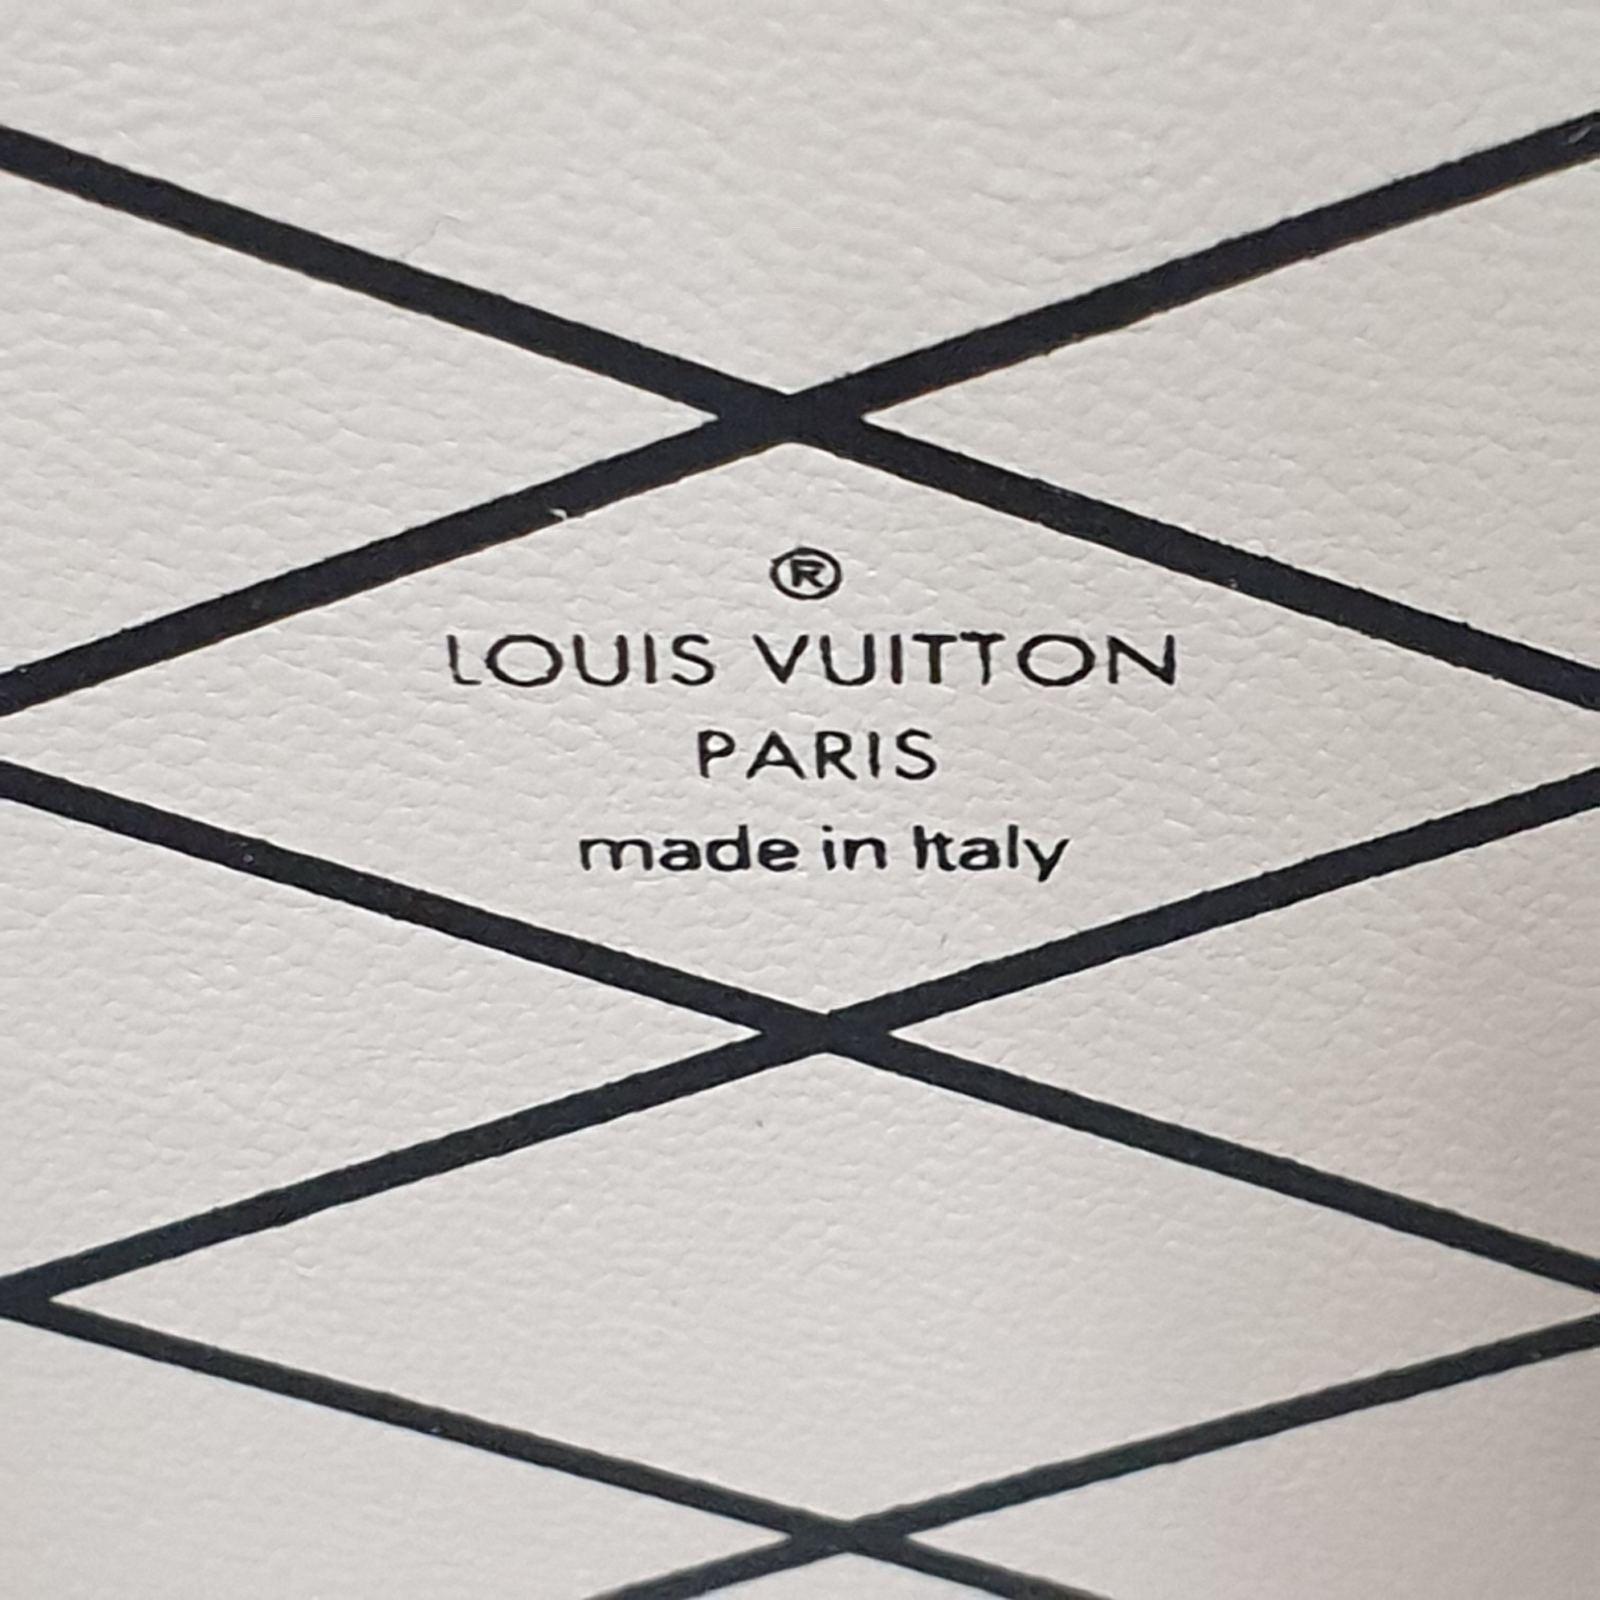 NWOB Louis Vuitton H/W 2018 Trunk Petite Malle Tasche 3